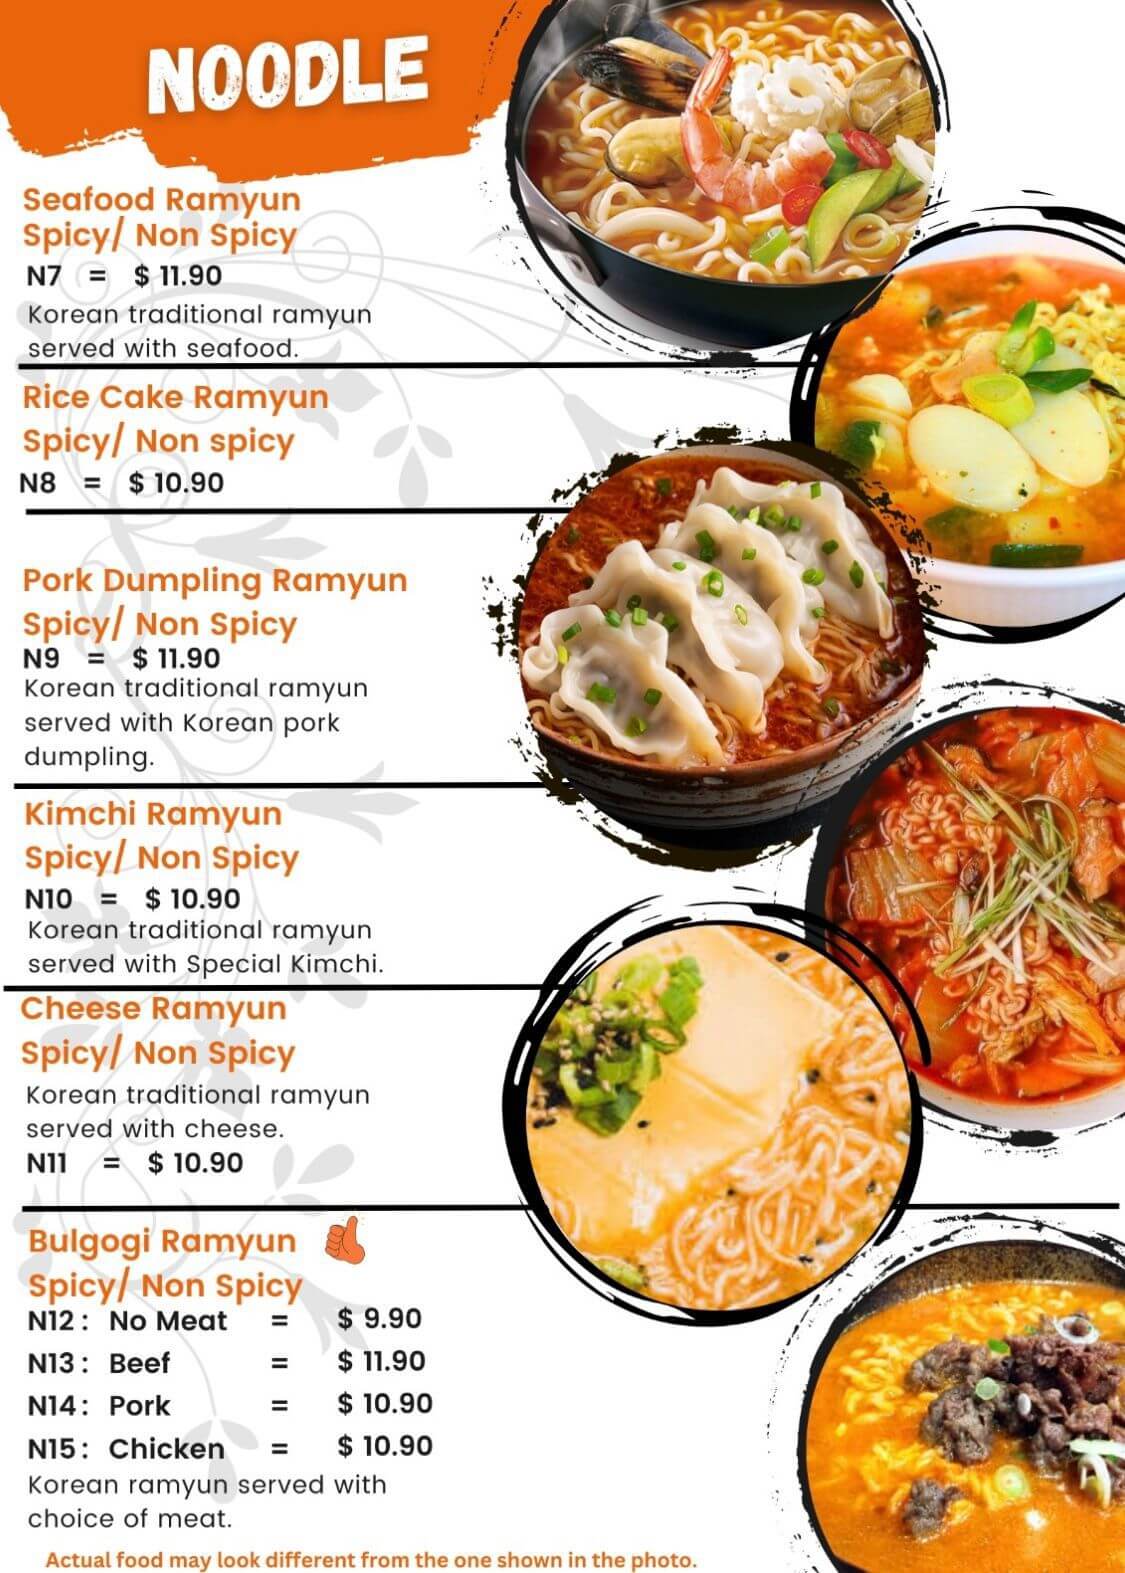 Korean Restaurant Expansion Looking For Investors Giving Very Good Returns